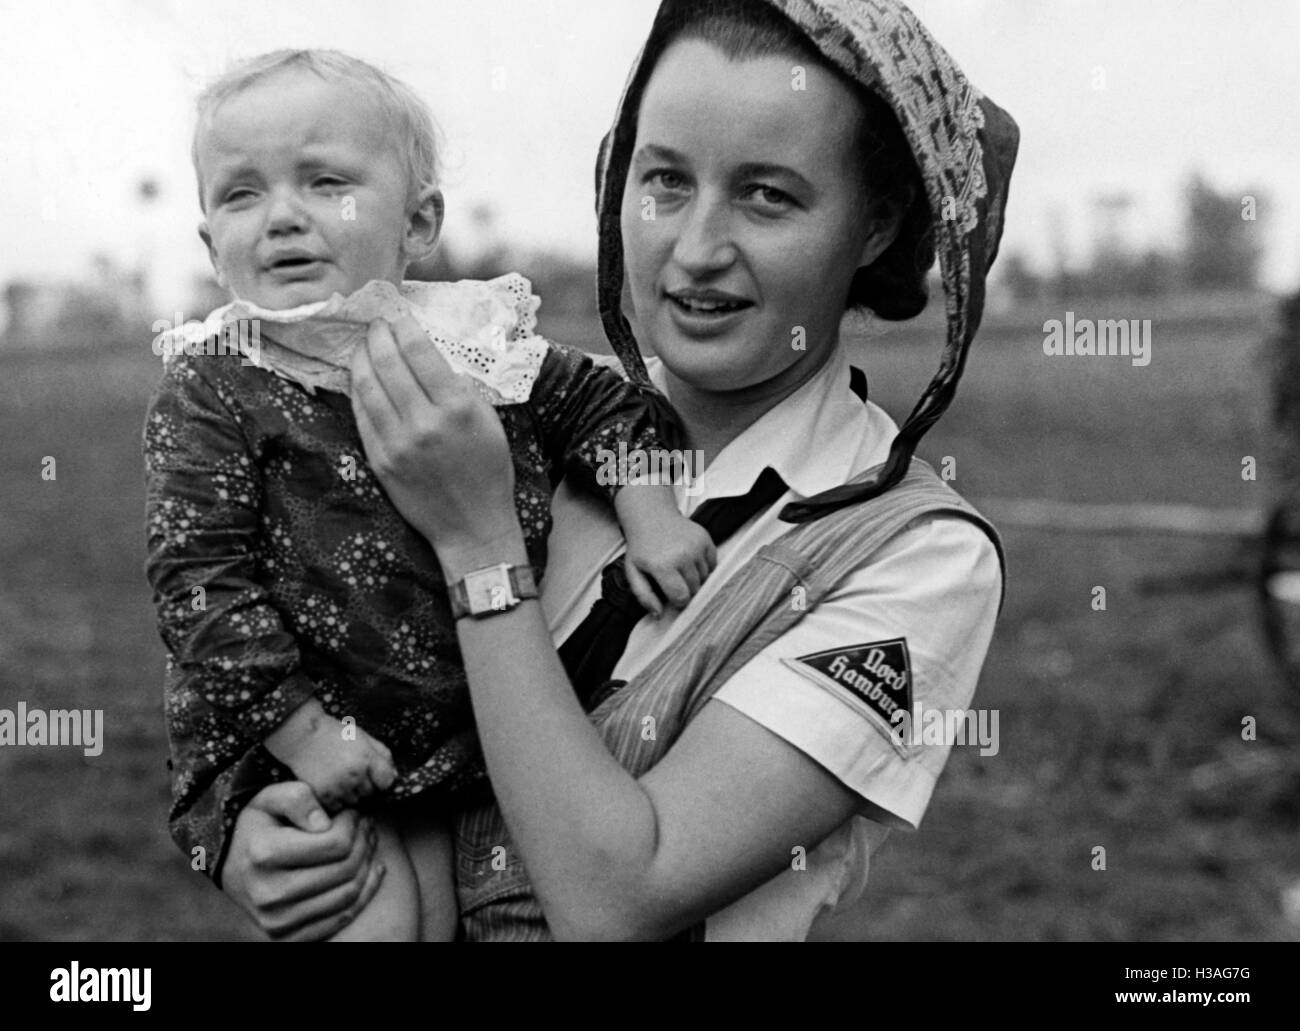 Landjahrmaedel with toddler, 1940 Stock Photo